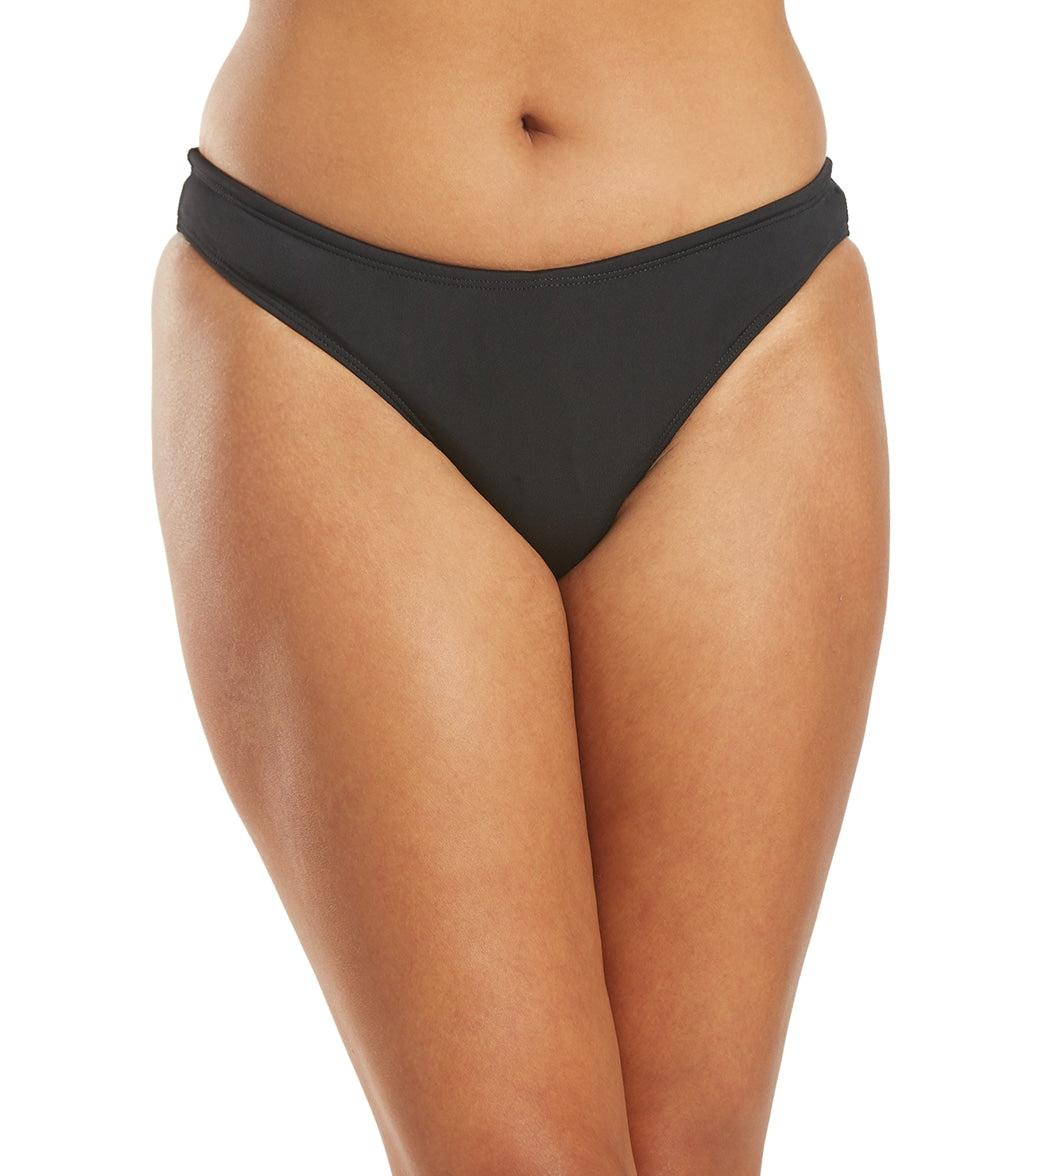 Nike Women's Swoosh Block Asymmetrical Bikini Top